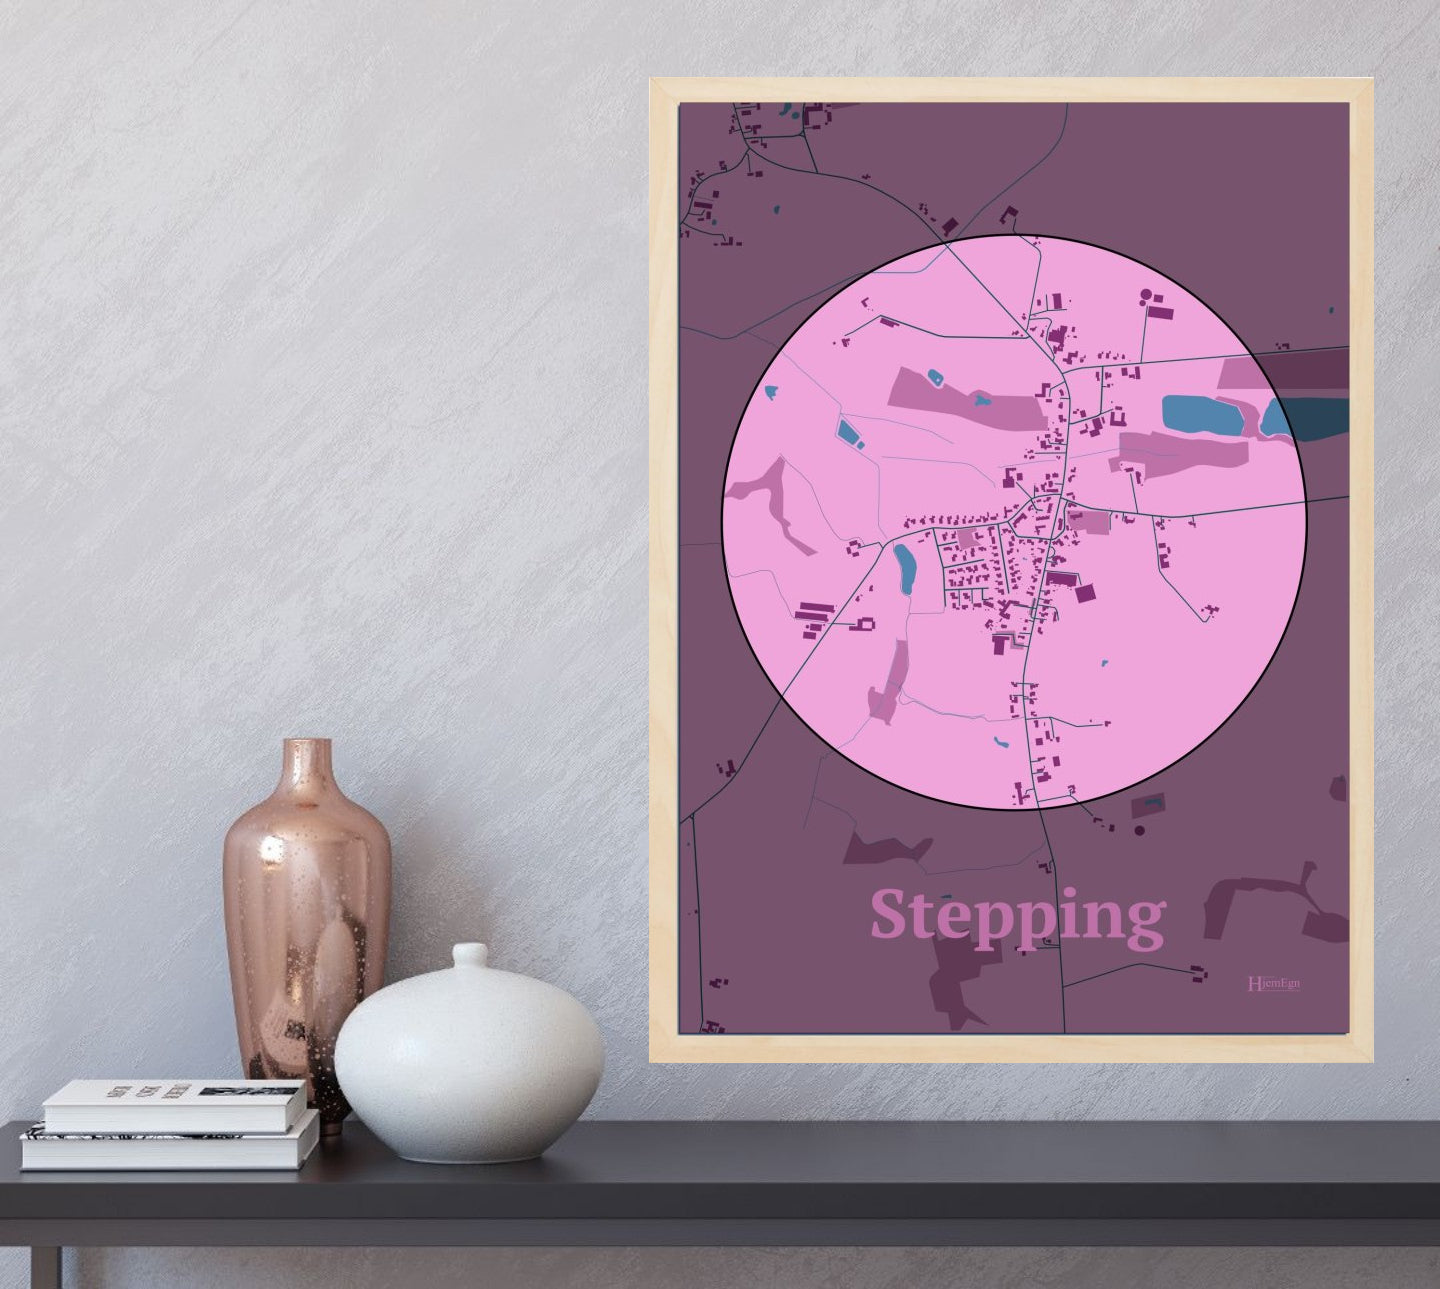 Stepping plakat i farve  og HjemEgn.dk design centrum. Design bykort for Stepping